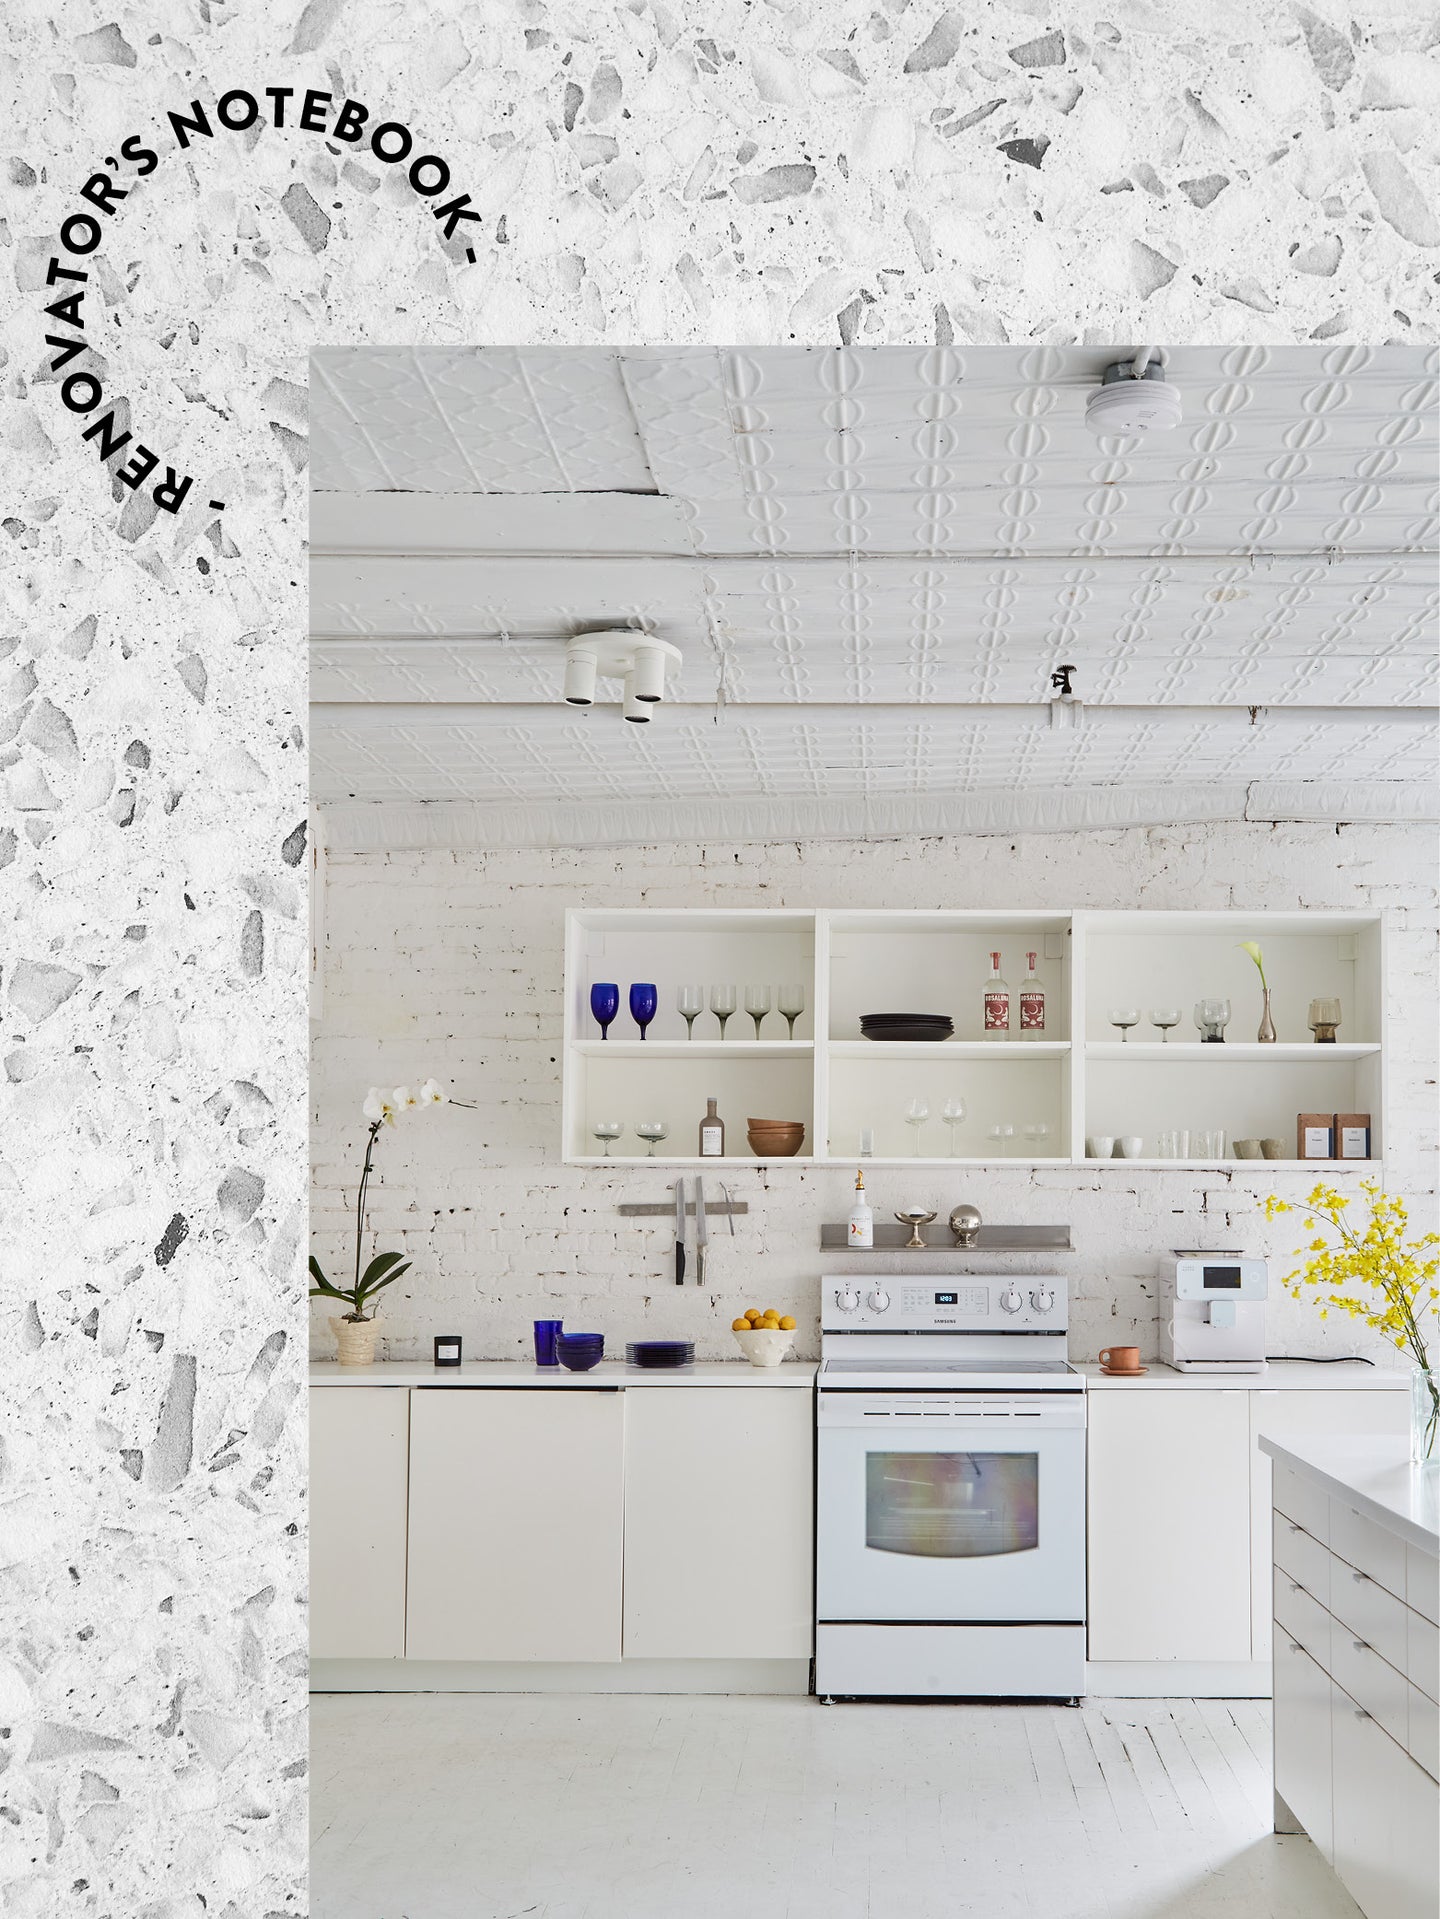 white kitchen on reno notebook background